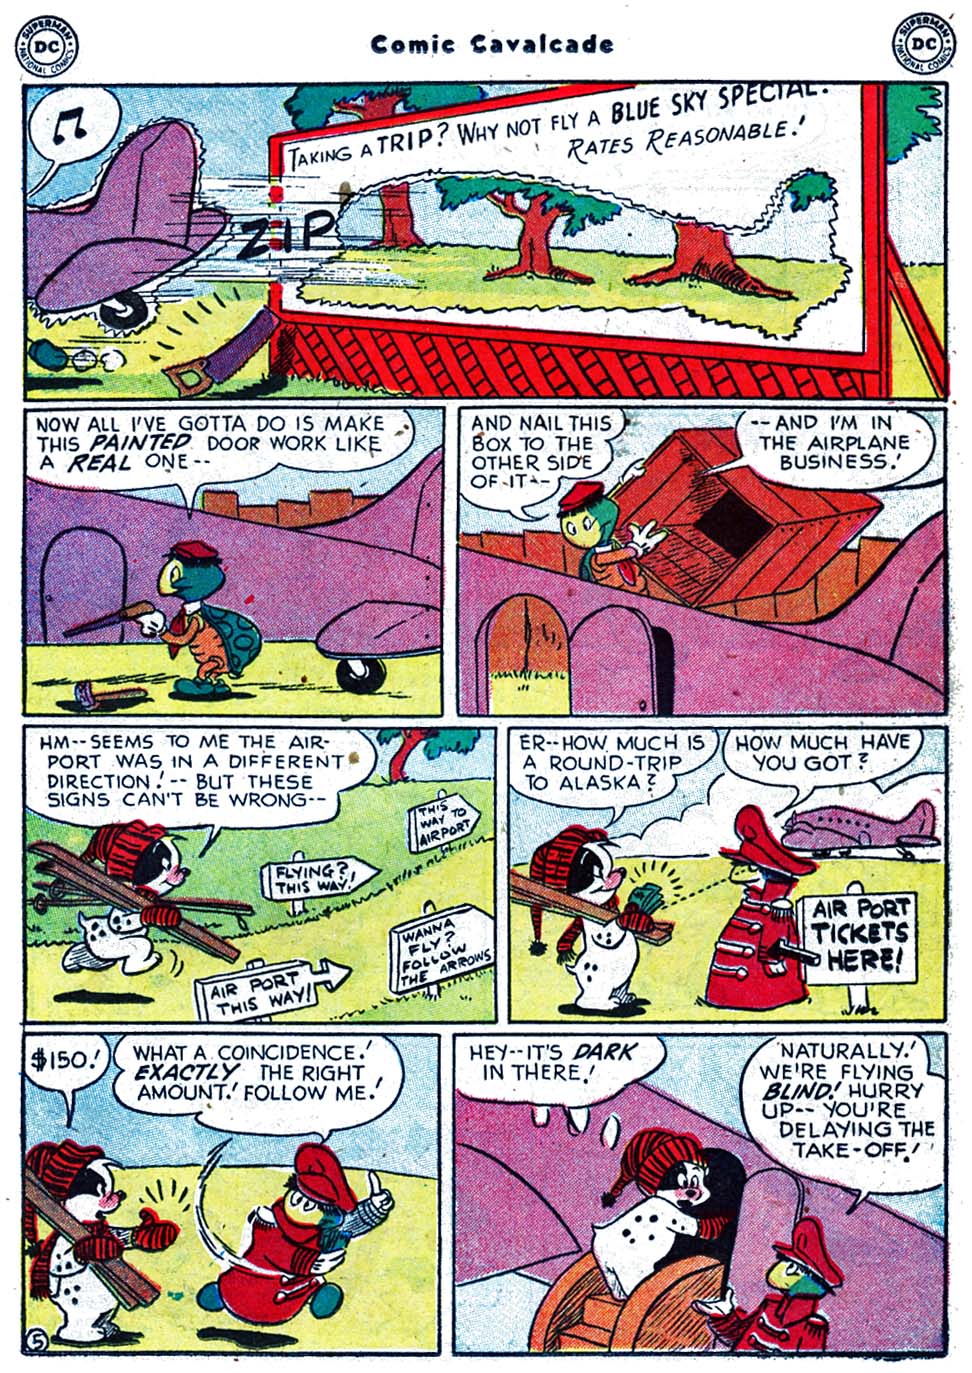 Comic Cavalcade issue 47 - Page 45